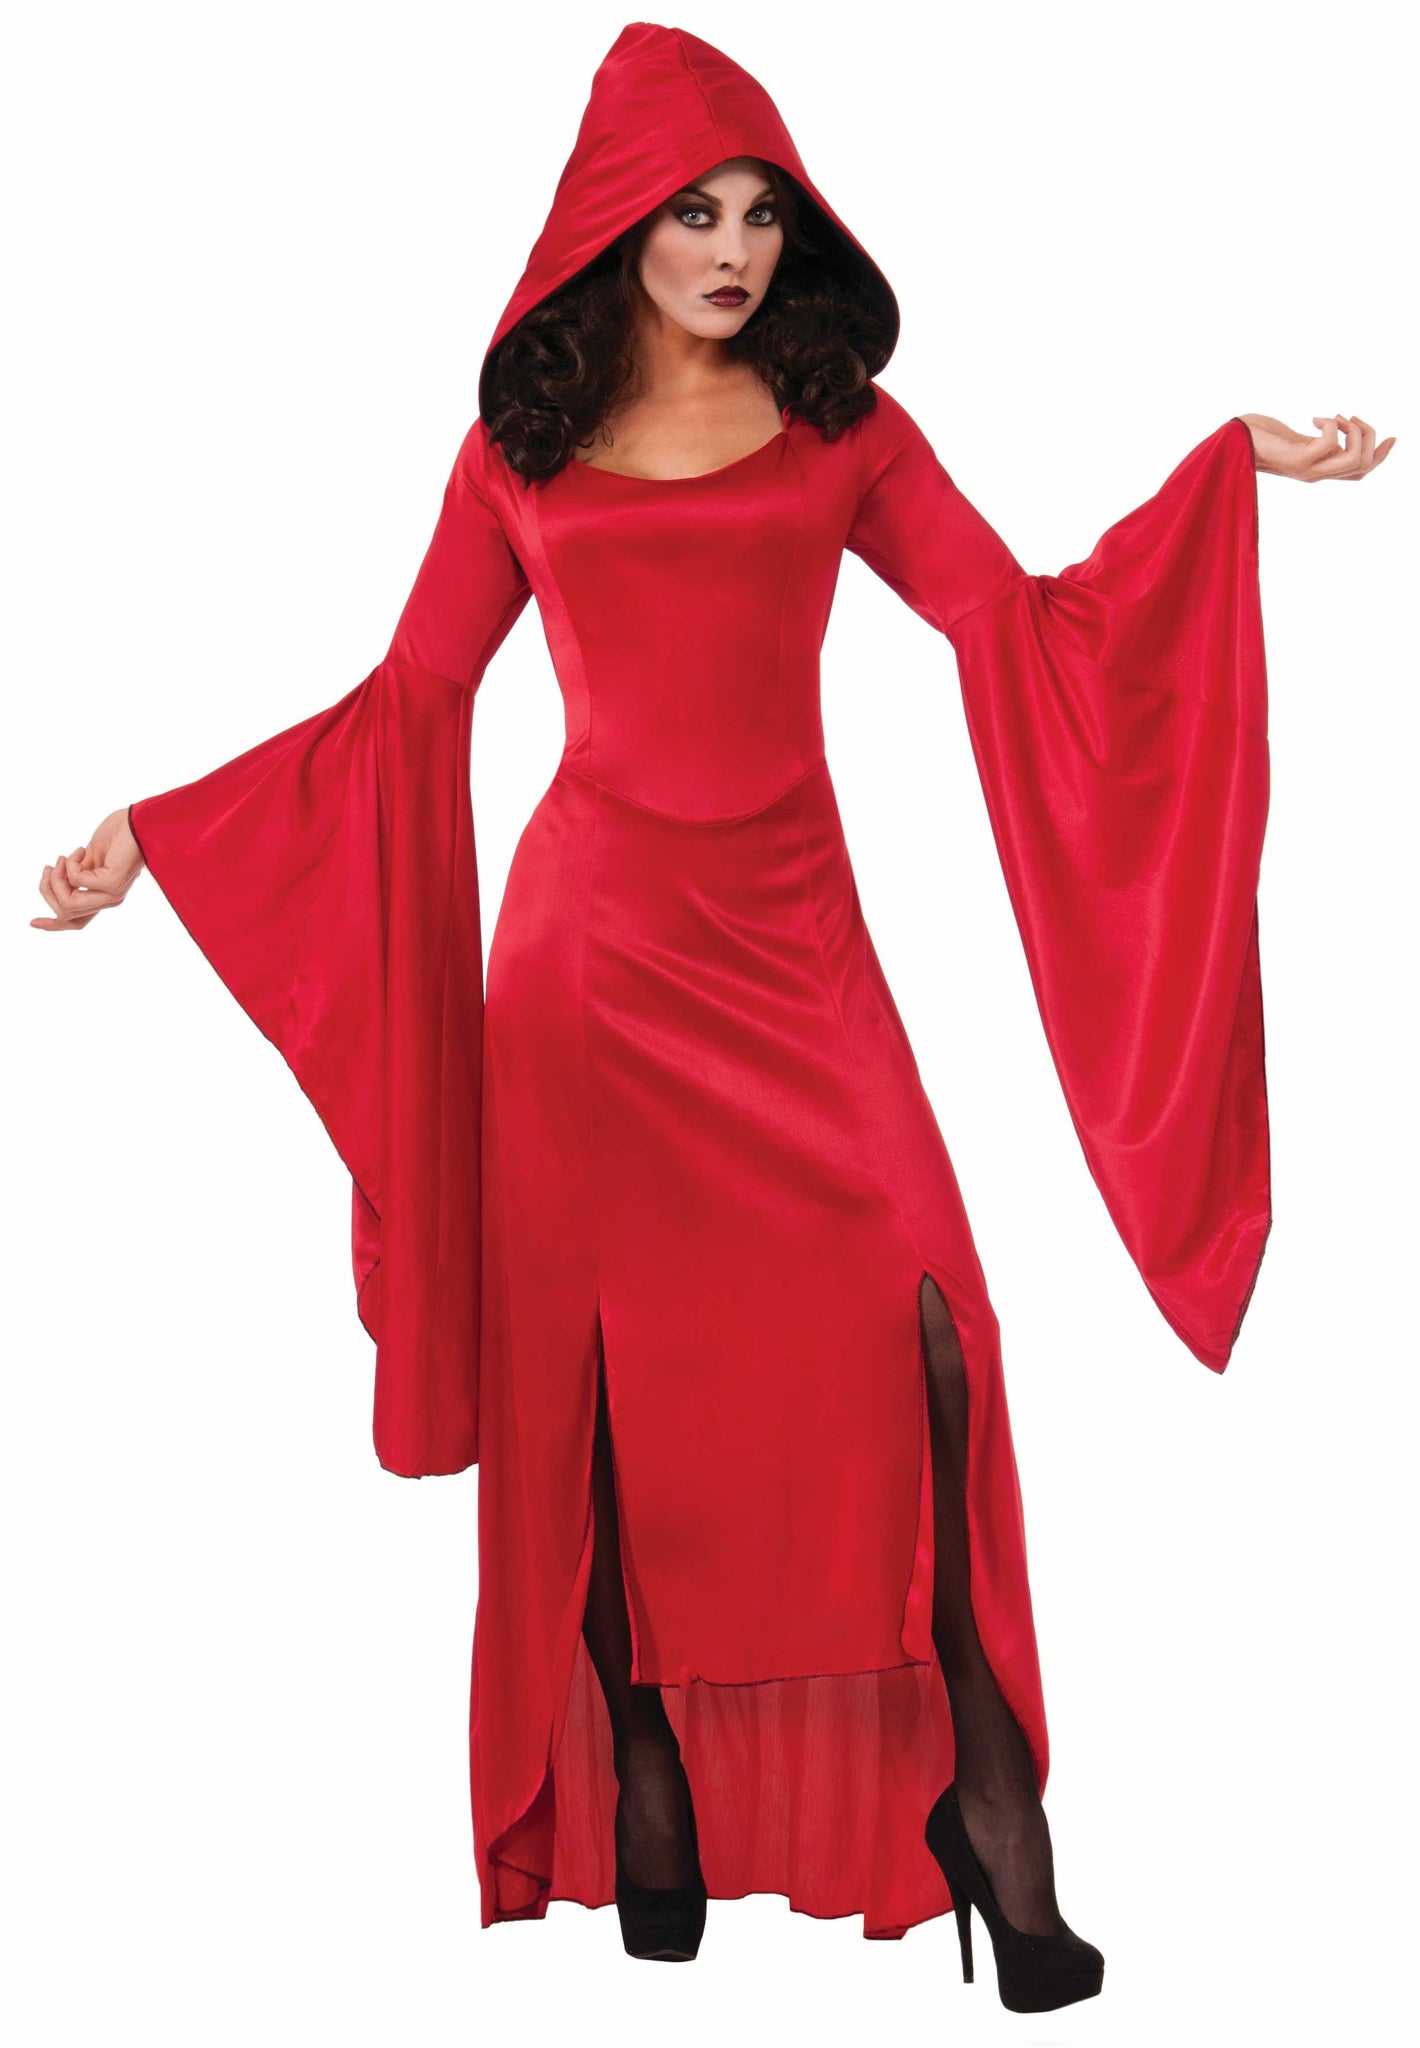 Red scarlet hooded dress